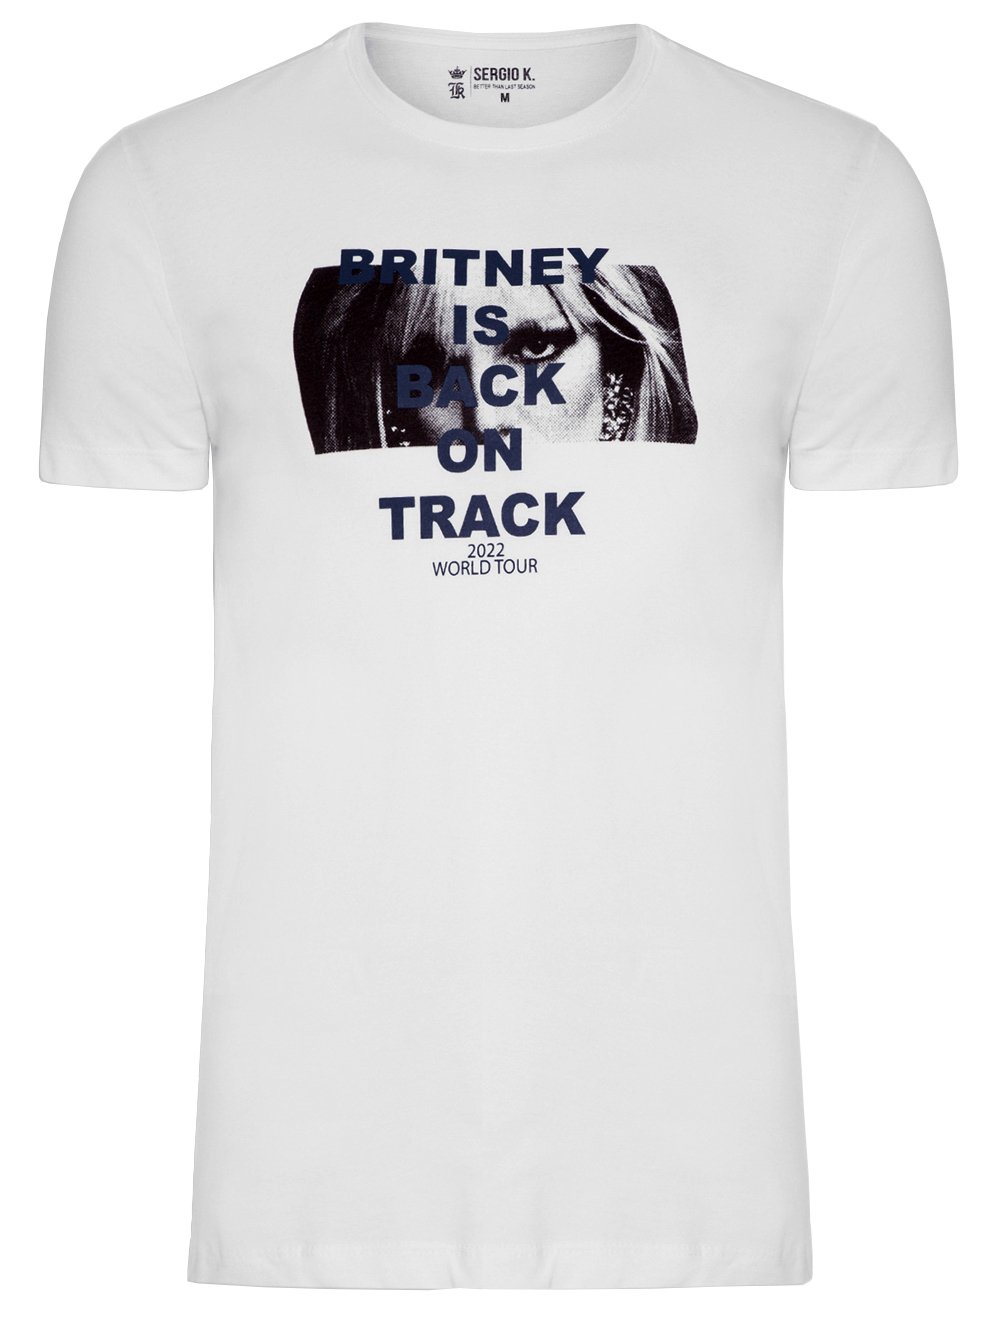 Camiseta Sergio K Masculina Brit. Is Back Branca